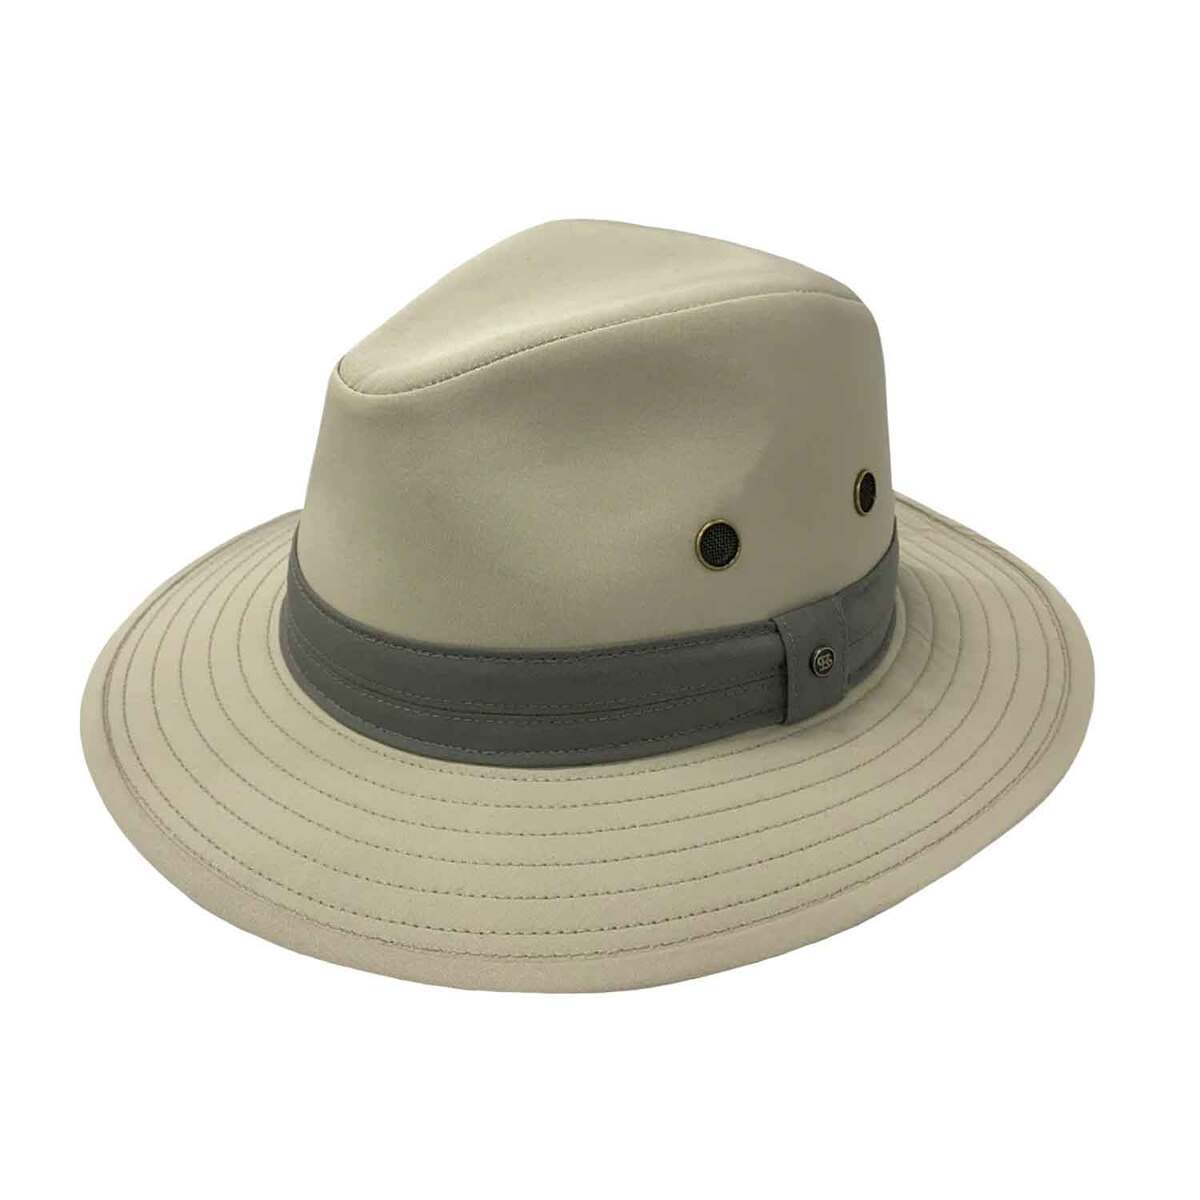 Kanut Sports Covington Safari Sun Hat - Natural/Grey - L - Natural/Grey ...